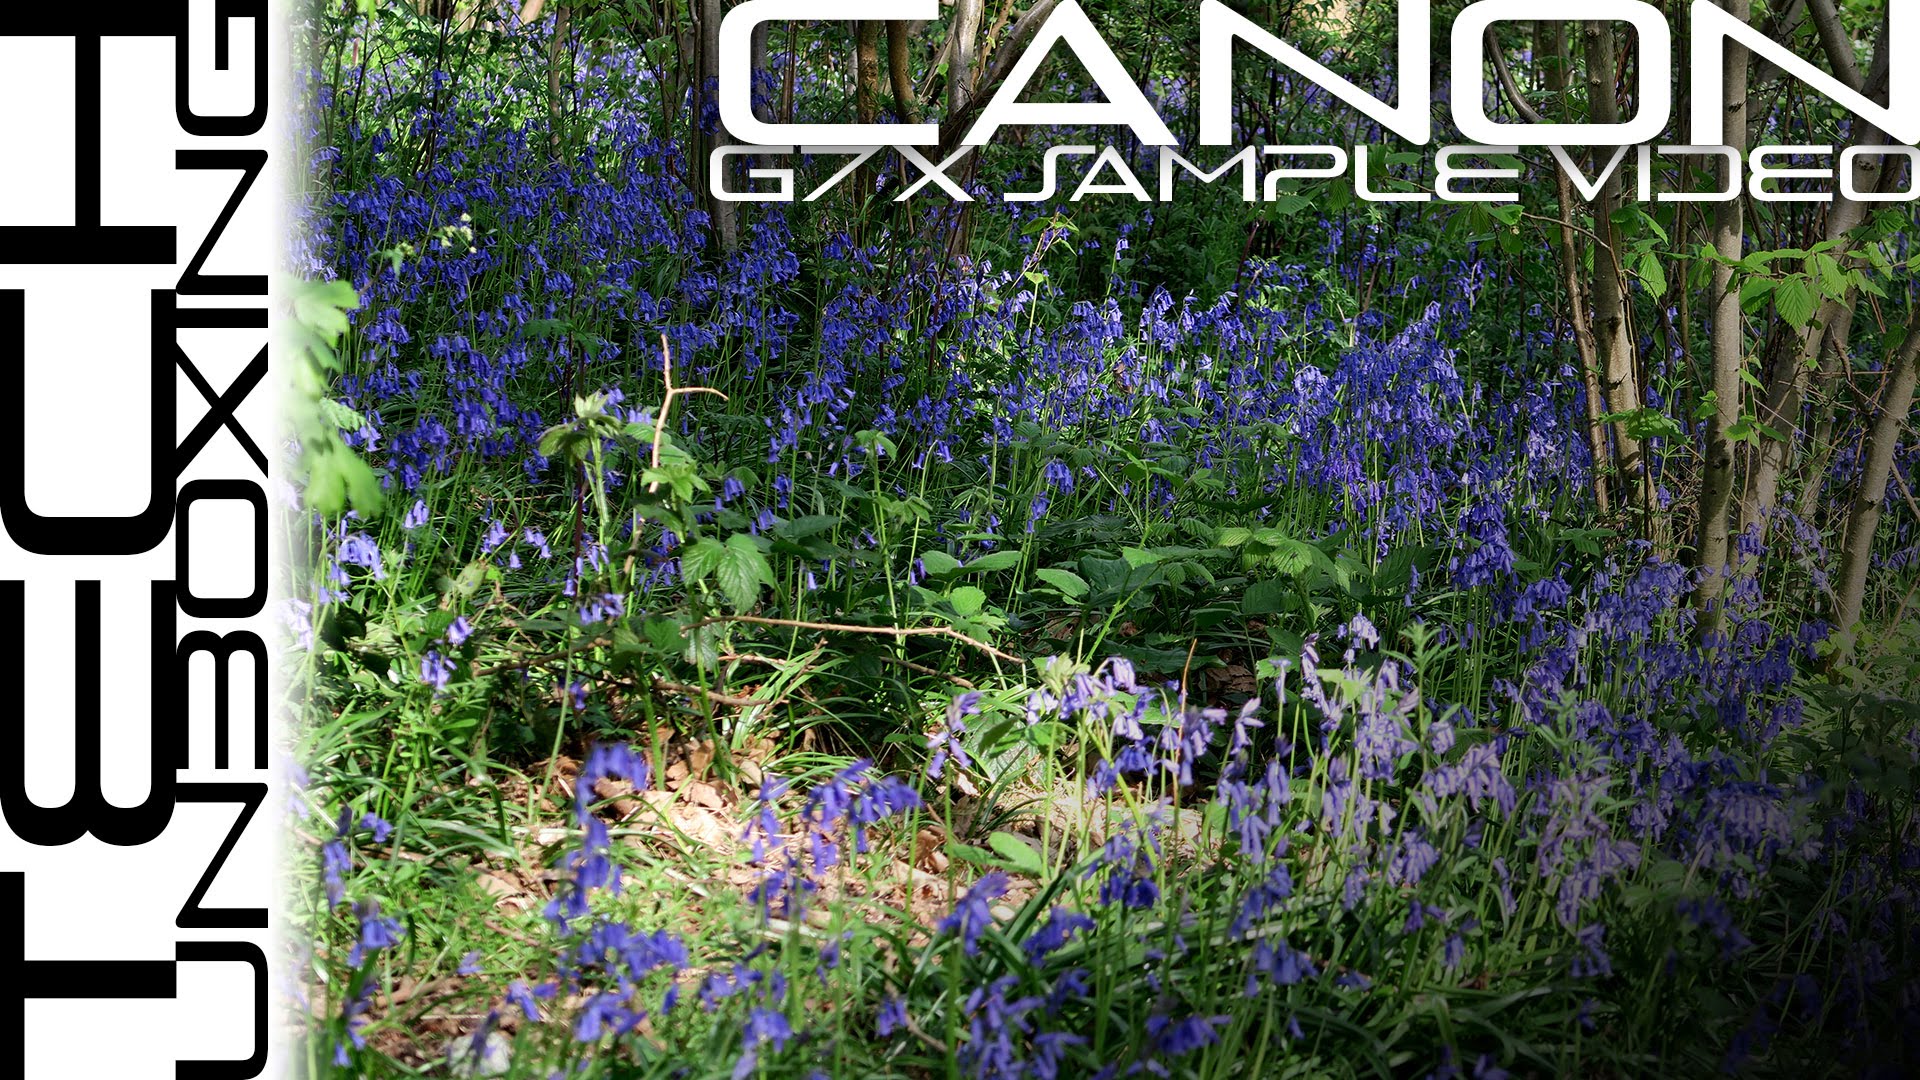 Canon PowerShot G7X Sample Video